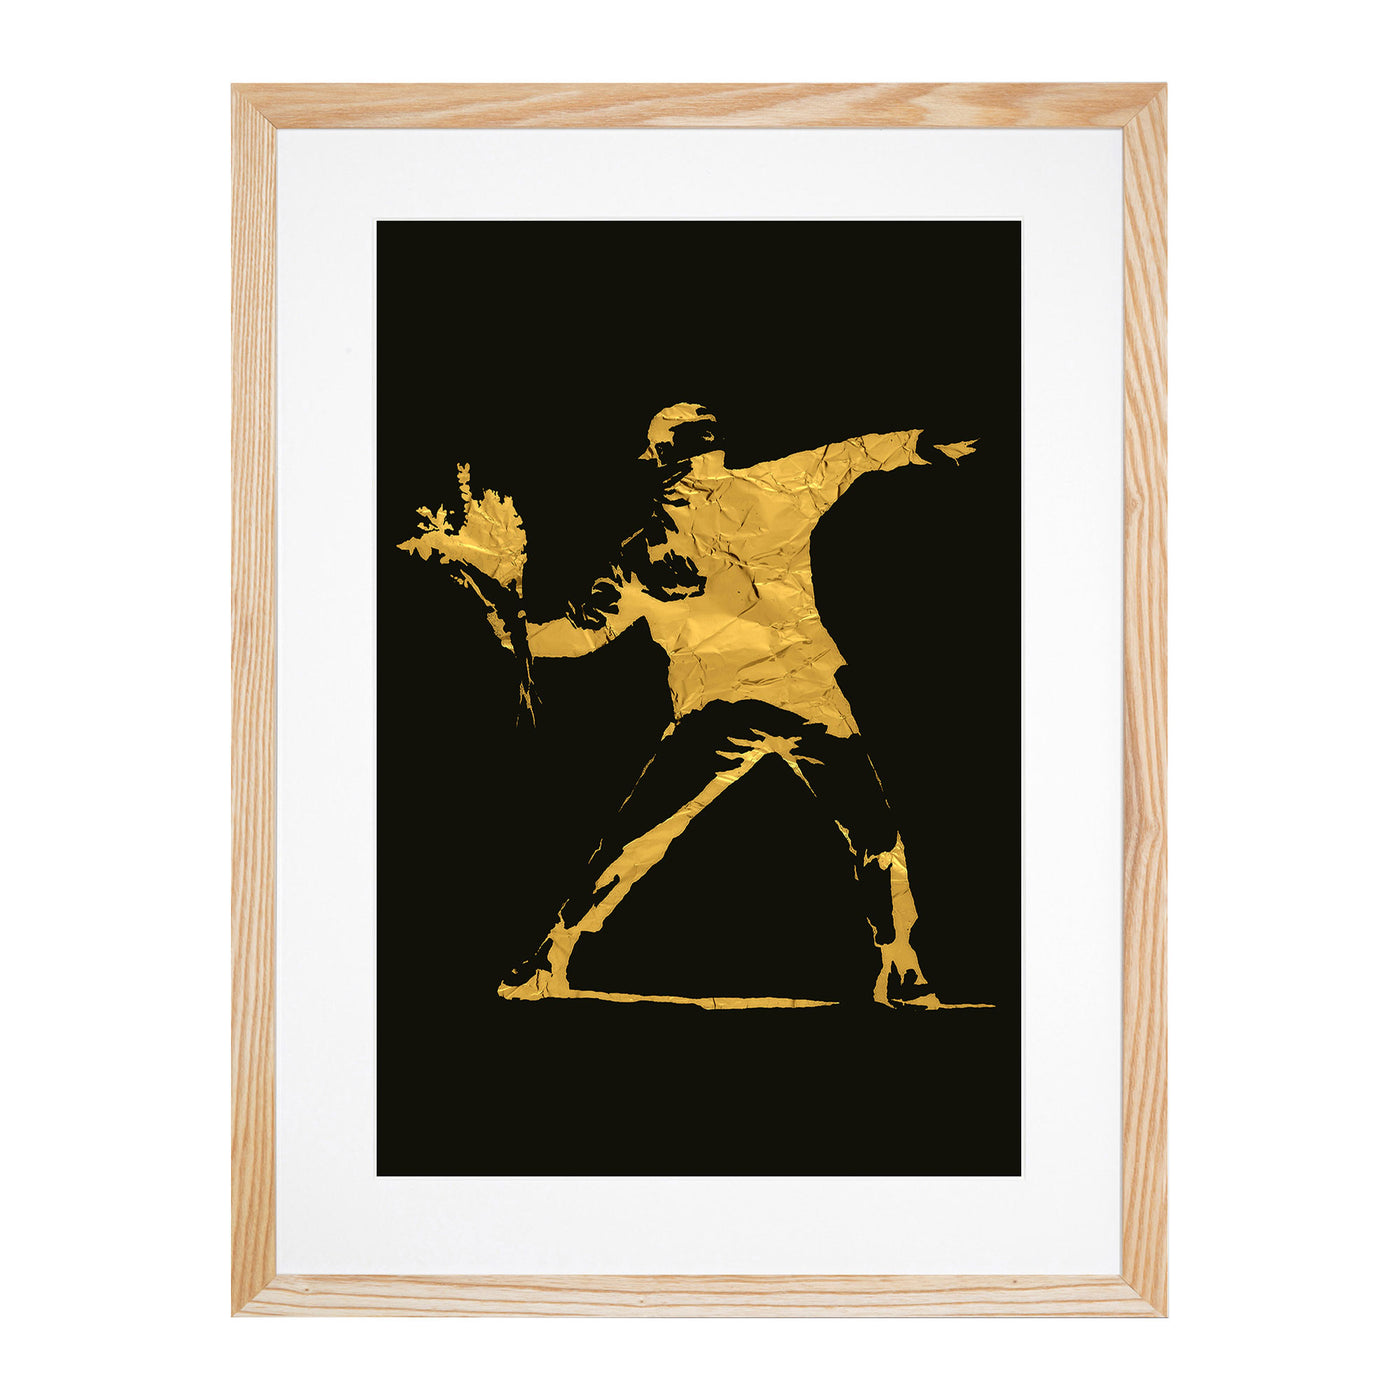 Banksy in Black Gold Flower Thrower